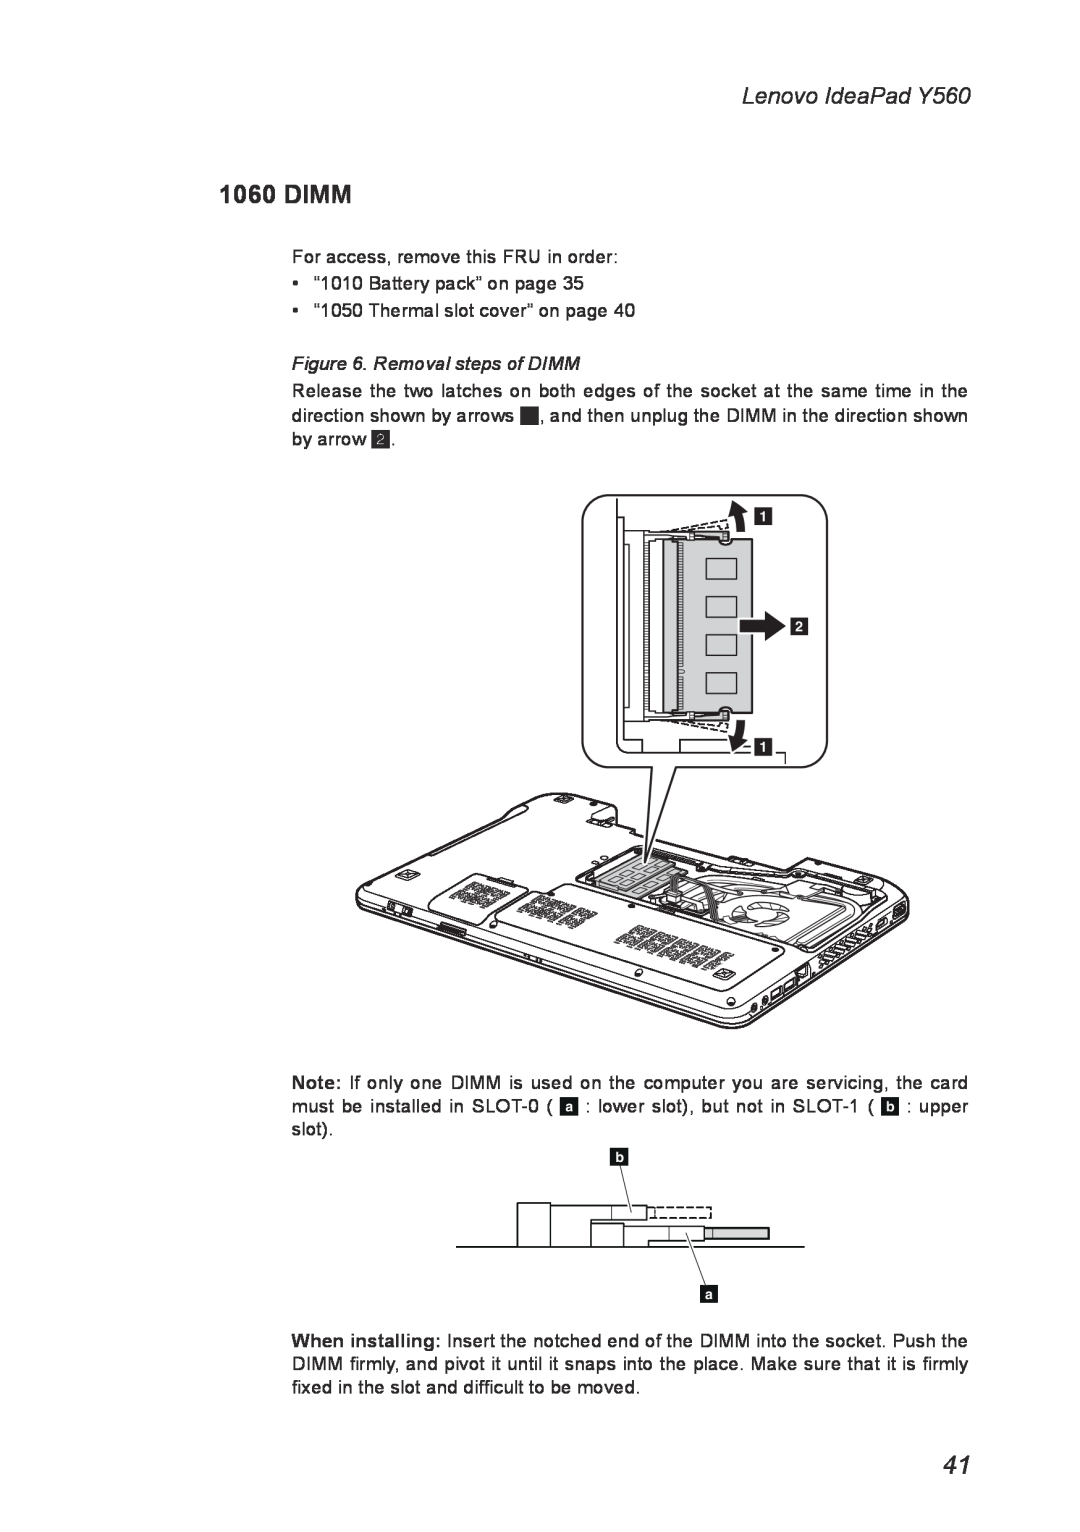 Lenovo manual Dimm, Removal steps of DIMM, Lenovo IdeaPad Y560 